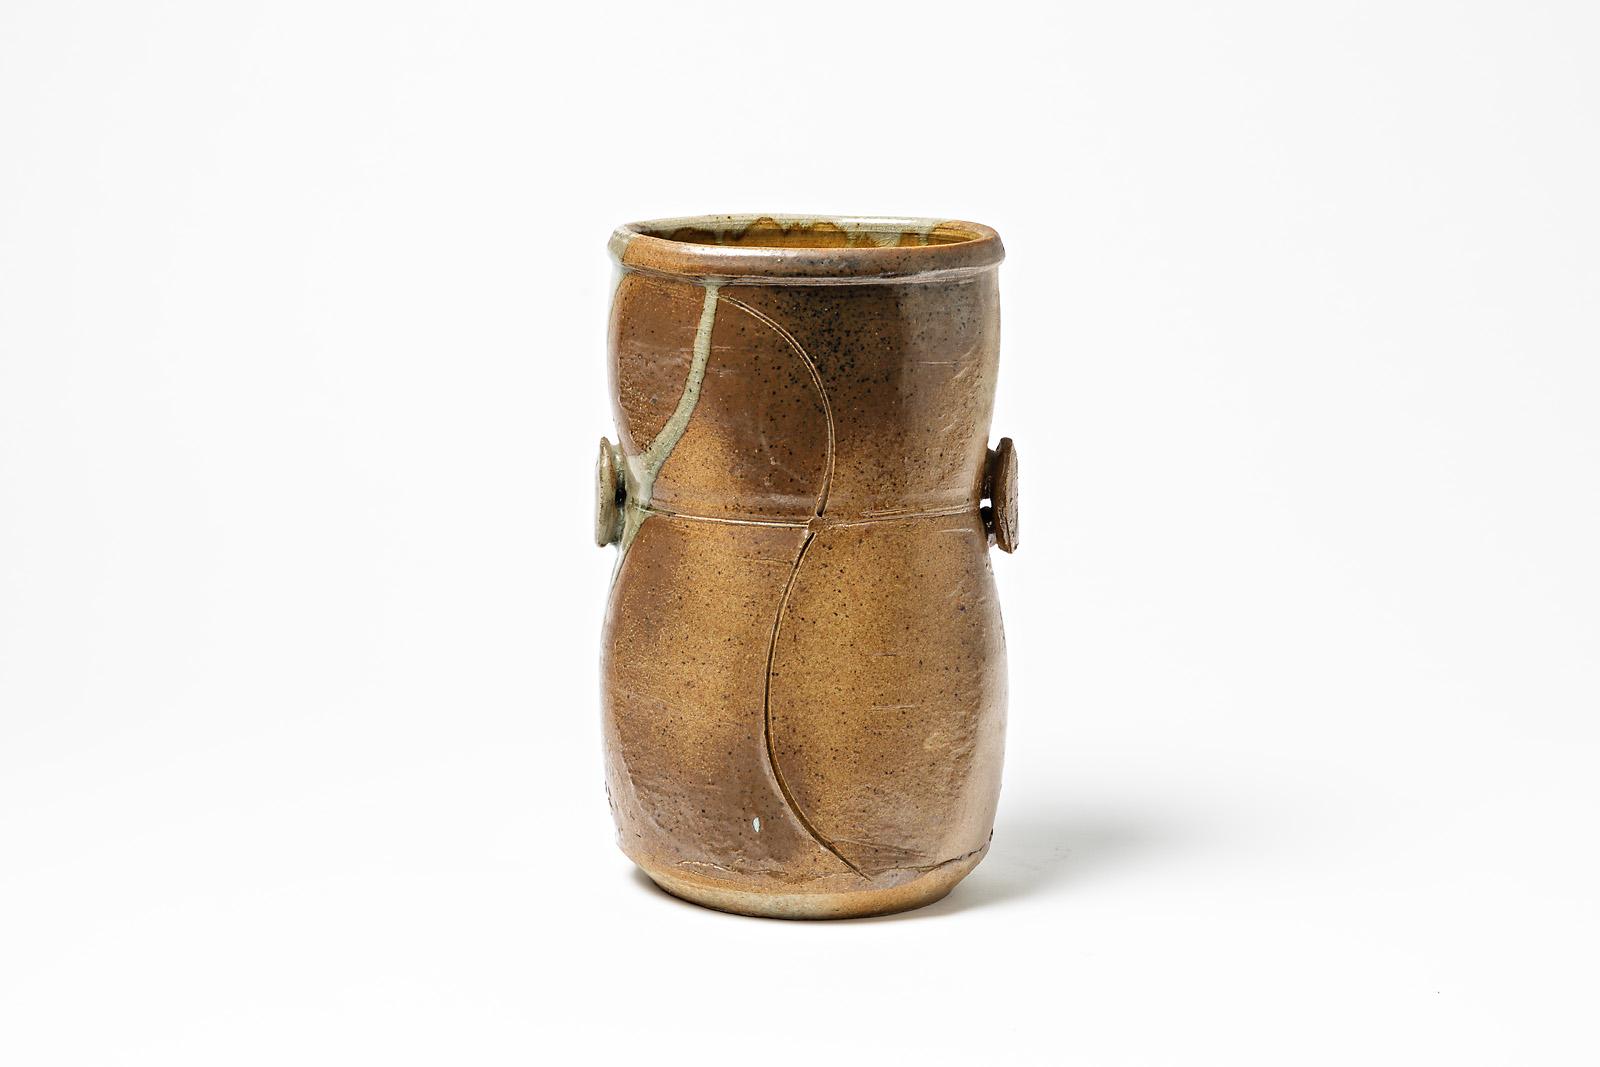 20th Century Modern Stoneware Ceramic Vase by Astoul in La Borne 1982 Shinny Grey Color For Sale